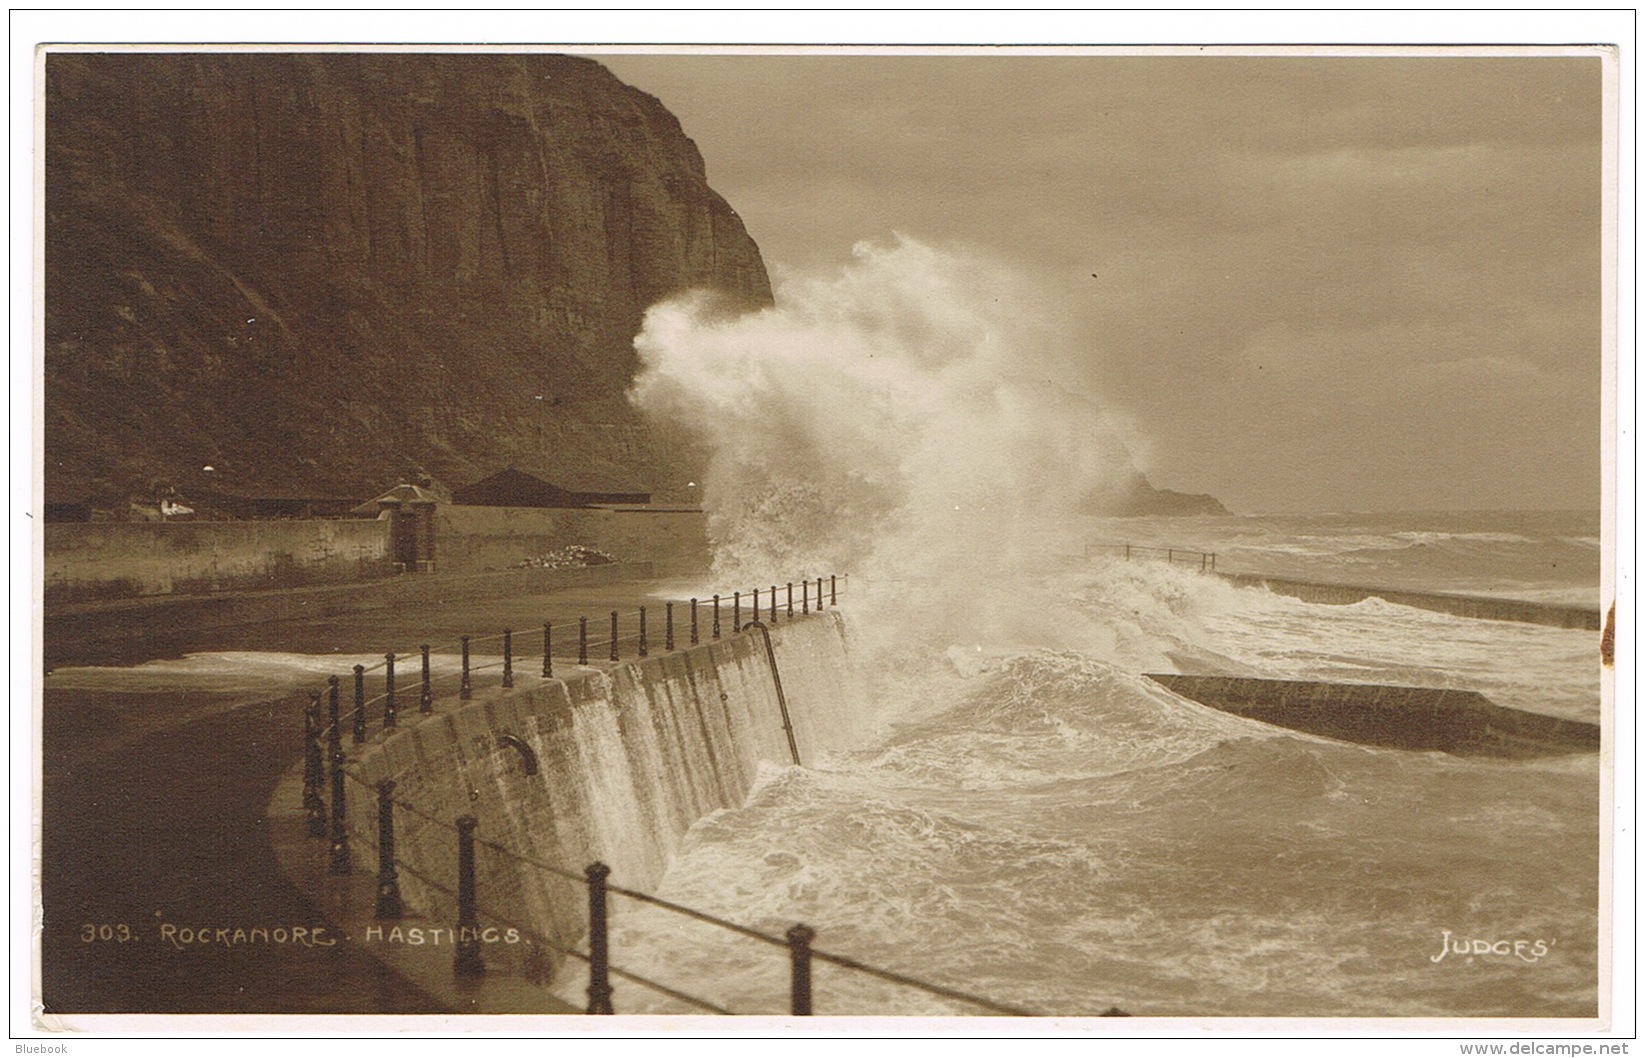 RB 1126 - Judges Real Photo Postcard - Rockanore &amp; High Seas - Hastings Sussex - Hastings